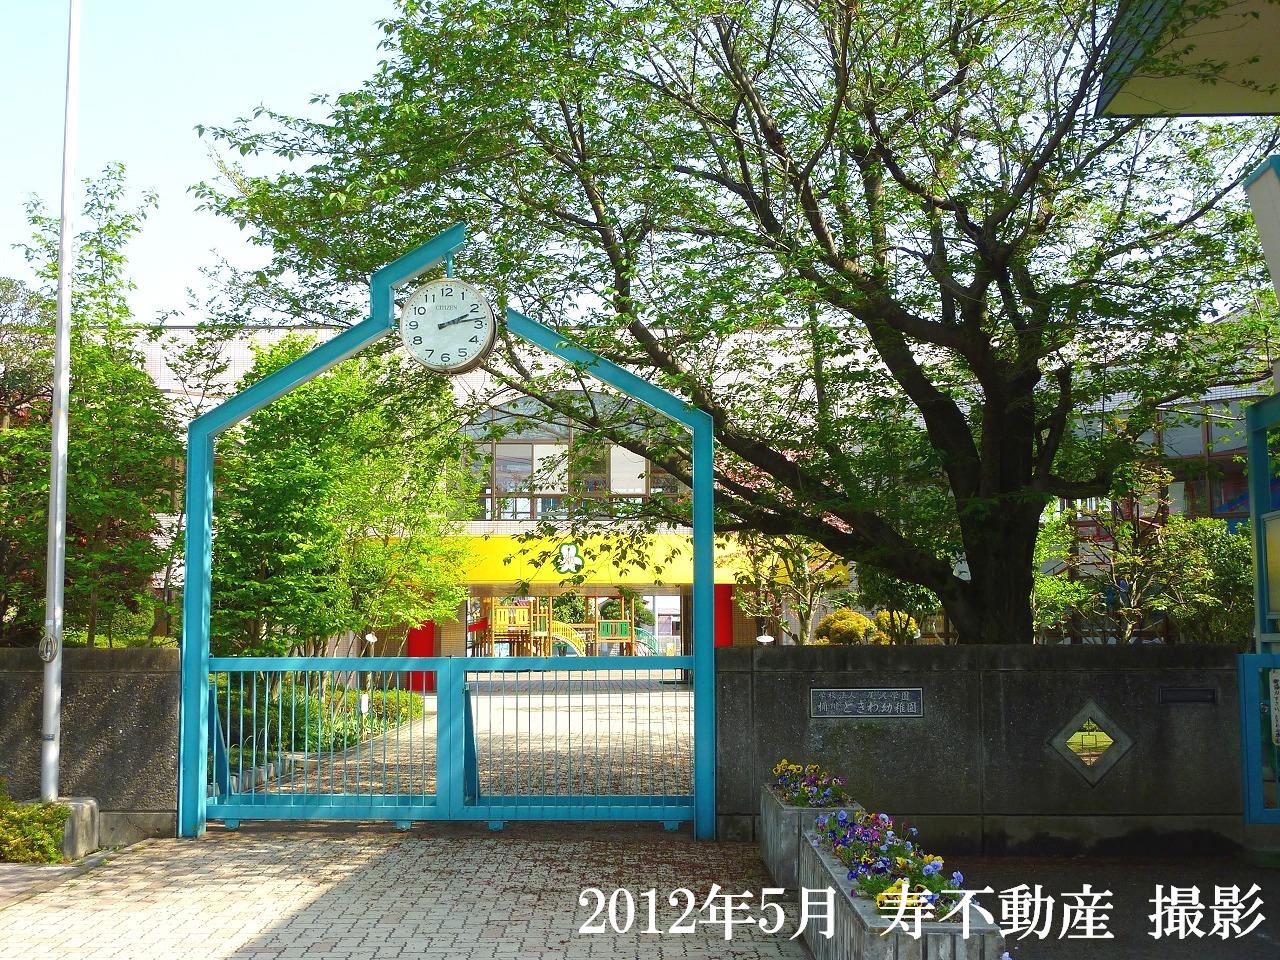 kindergarten ・ Nursery. Okegawa Tokiwa kindergarten (kindergarten ・ 425m to the nursery)